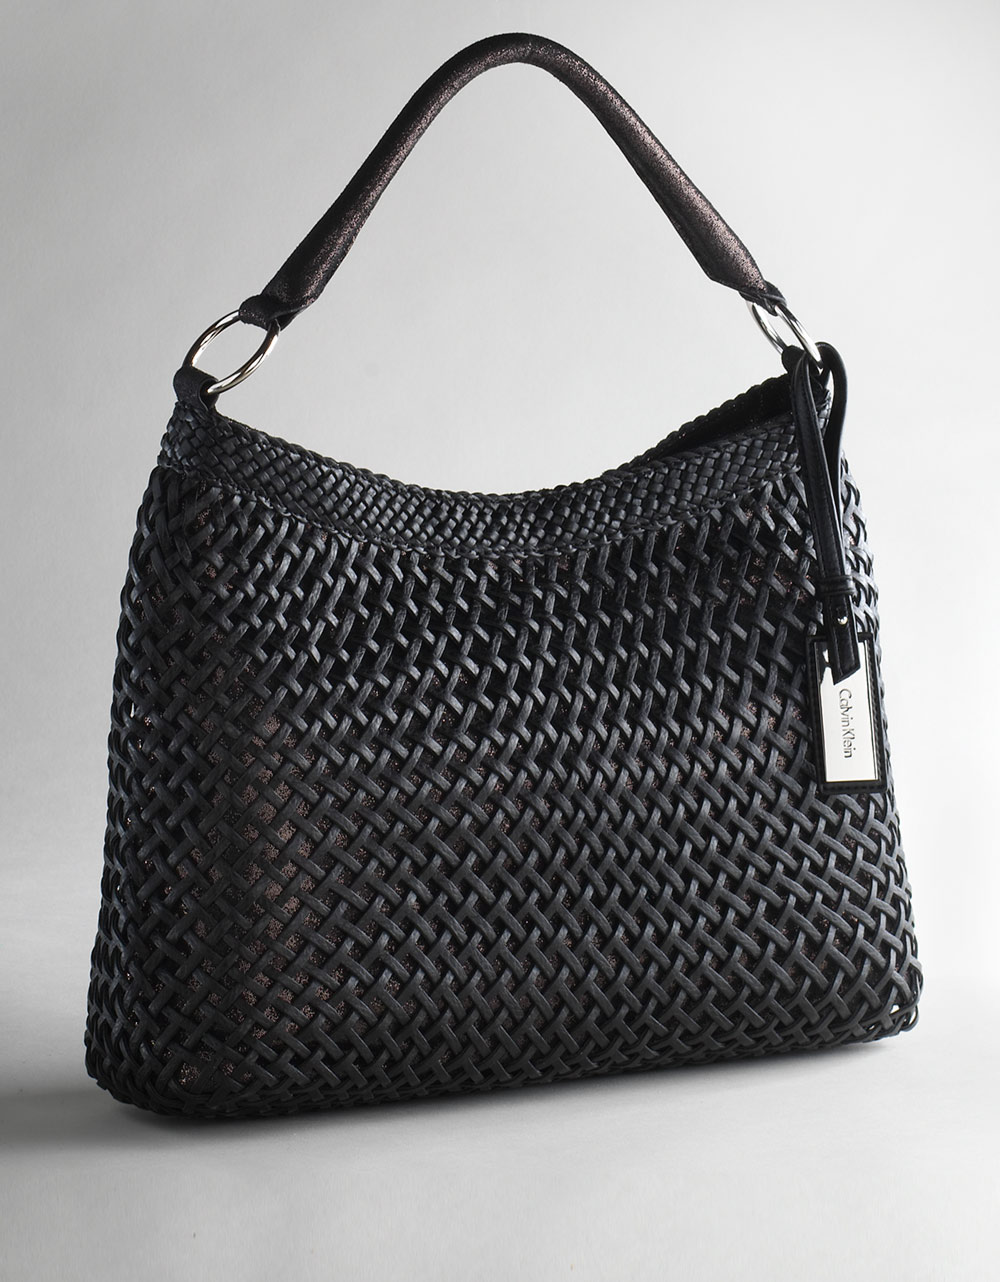 Calvin Klein Woven Leather Hobo Handbag in Black | Lyst